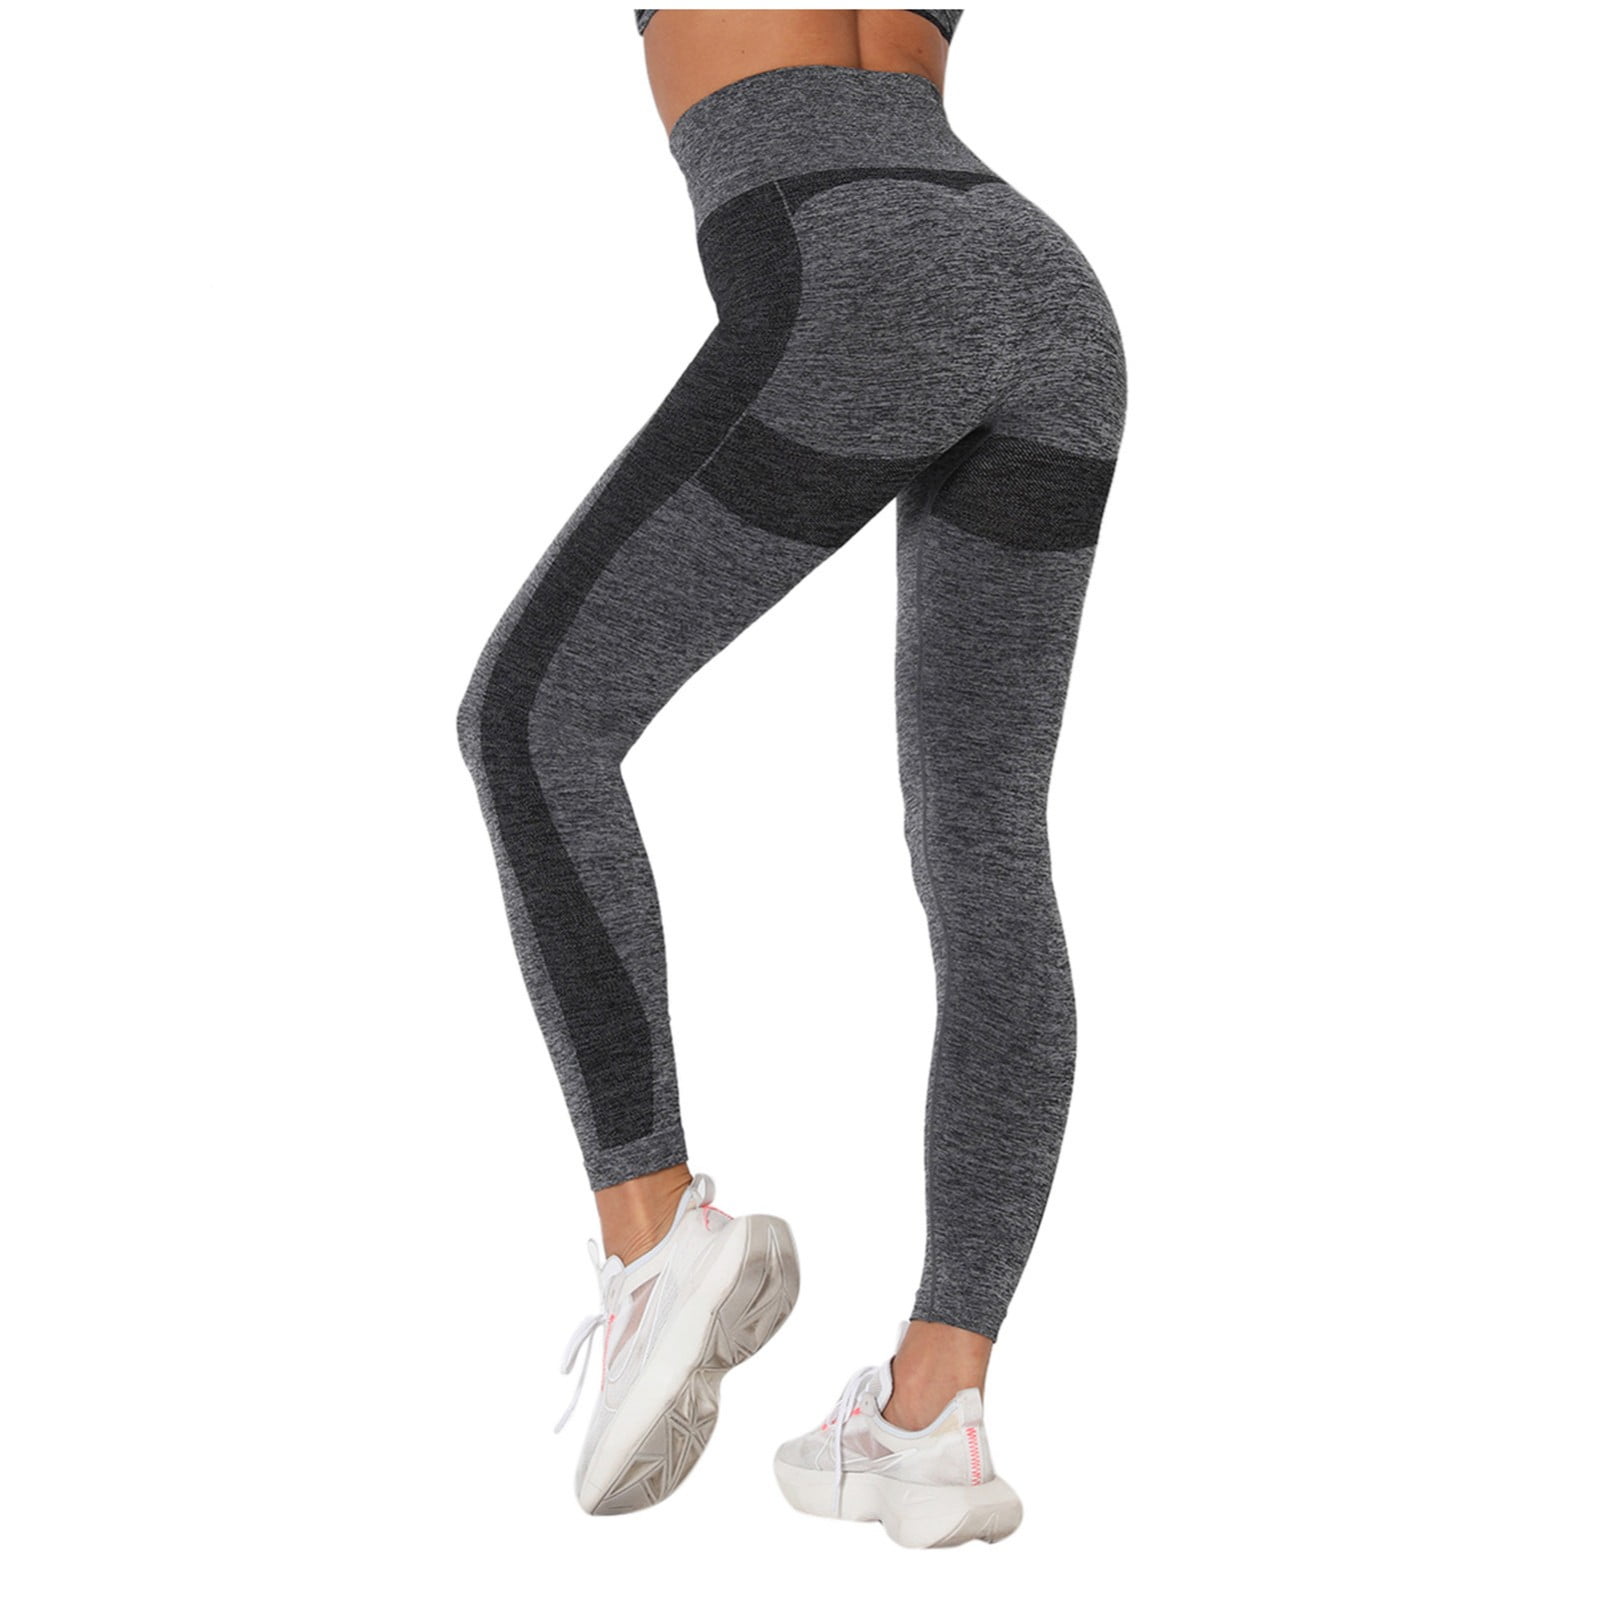 HAPIMO Sales Women's Yoga Pants High Waist Tummy Control